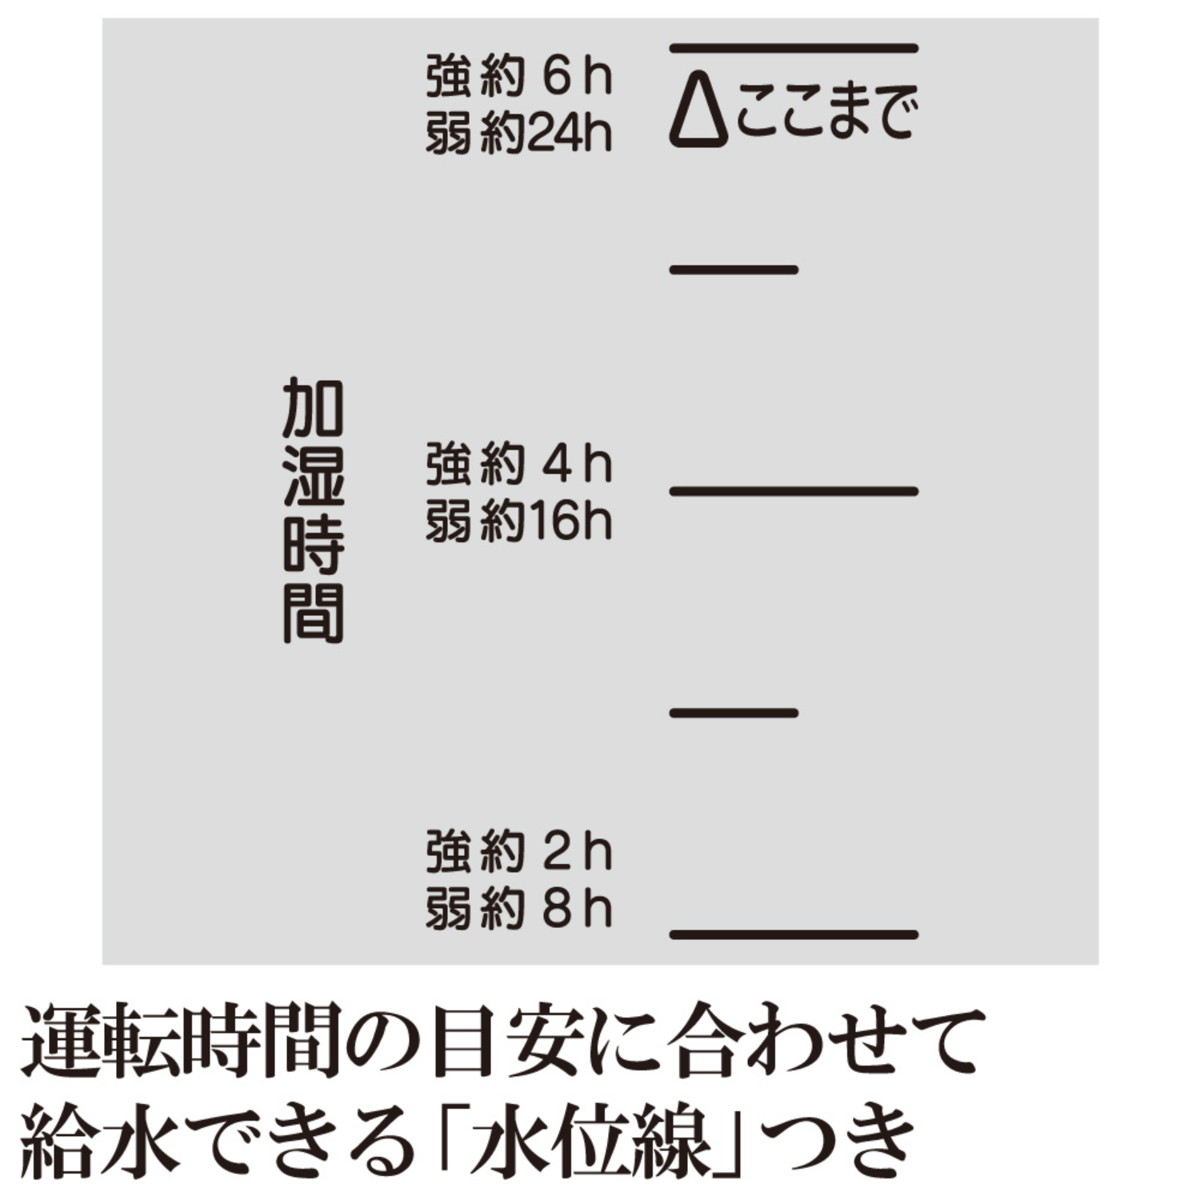 ZOUJIRUSHI スチーム式加湿器 3.0L ホワイト 大容量 木造8畳まで/プレハブ洋室13畳まで 日本製 乾燥対策